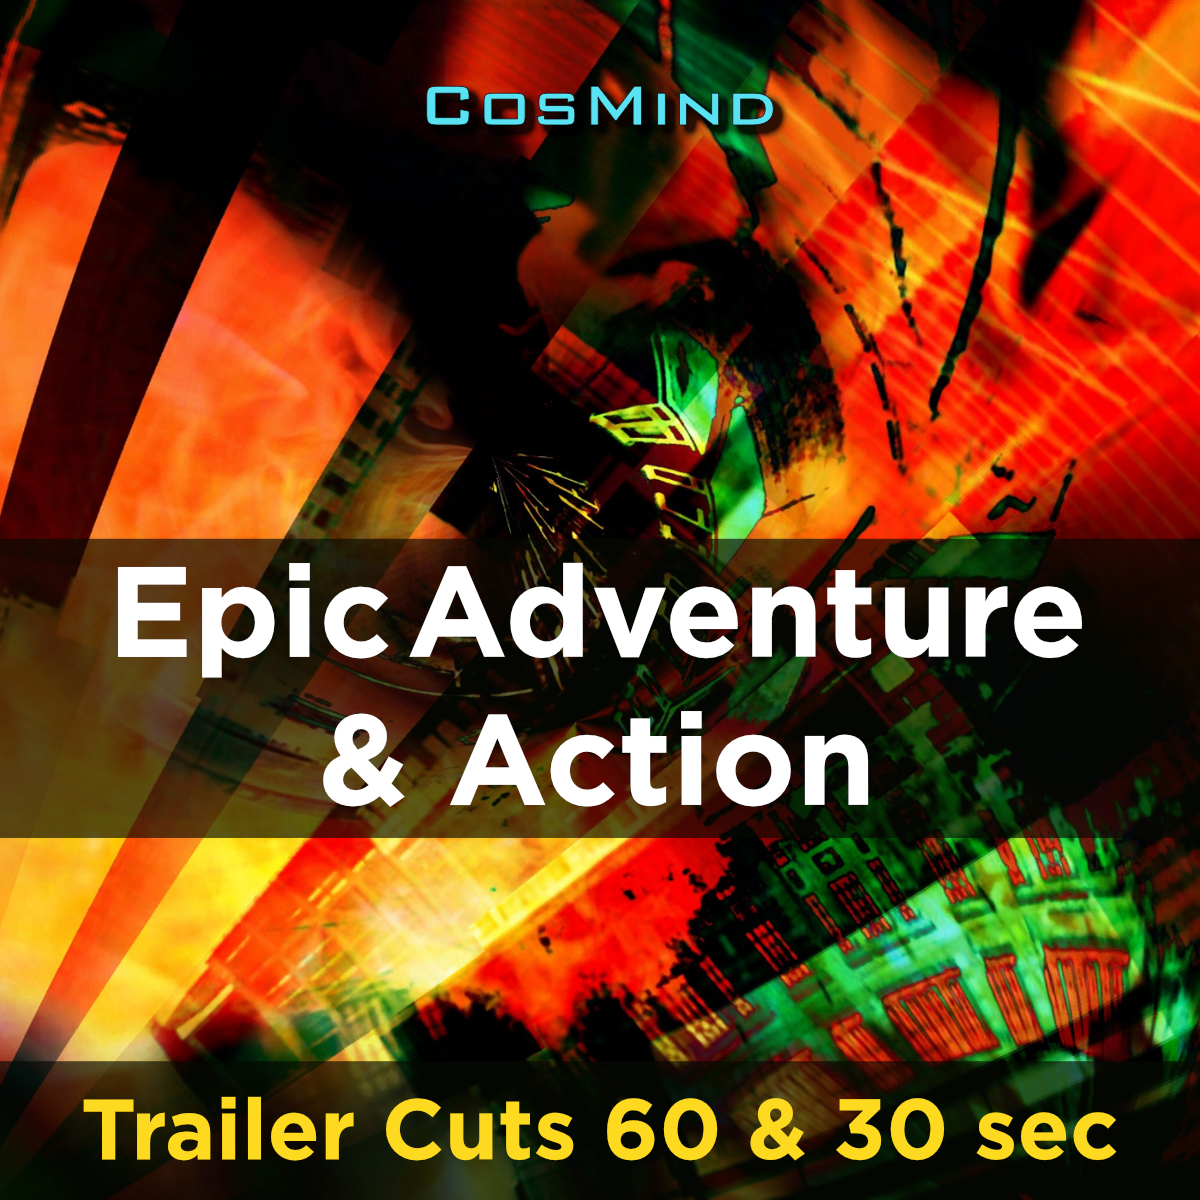 Epic Adventure & Action - Trailer Cuts 60 & 30